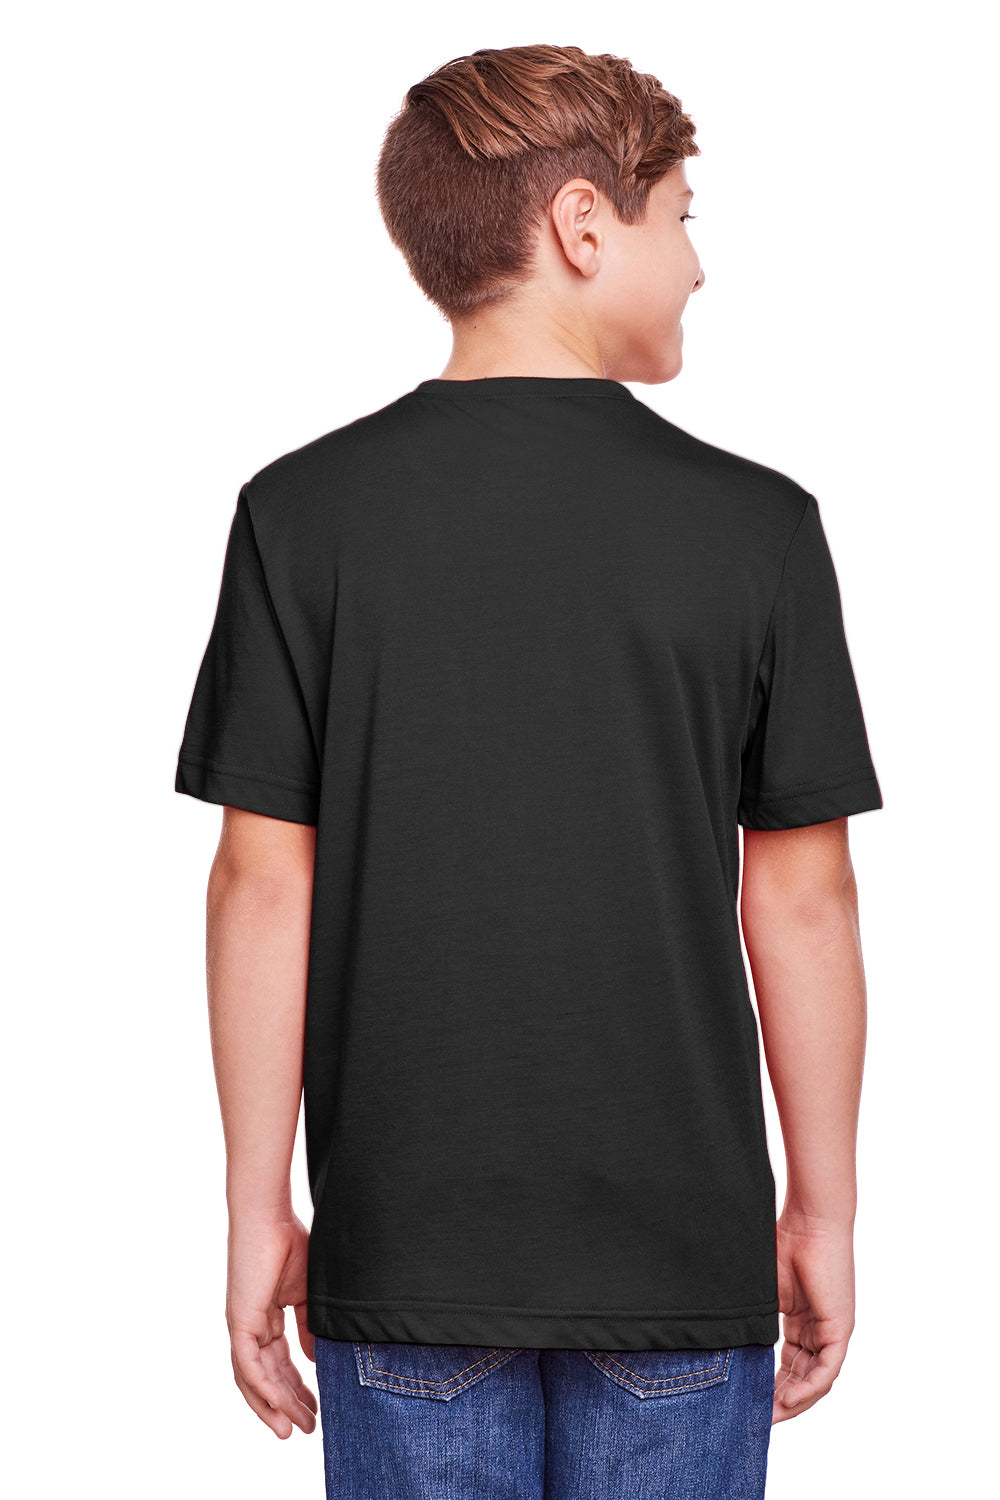 Core 365 CE111Y Youth Fusion ChromaSoft Performance Moisture Wicking Short Sleeve Crewneck T-Shirt Black Back